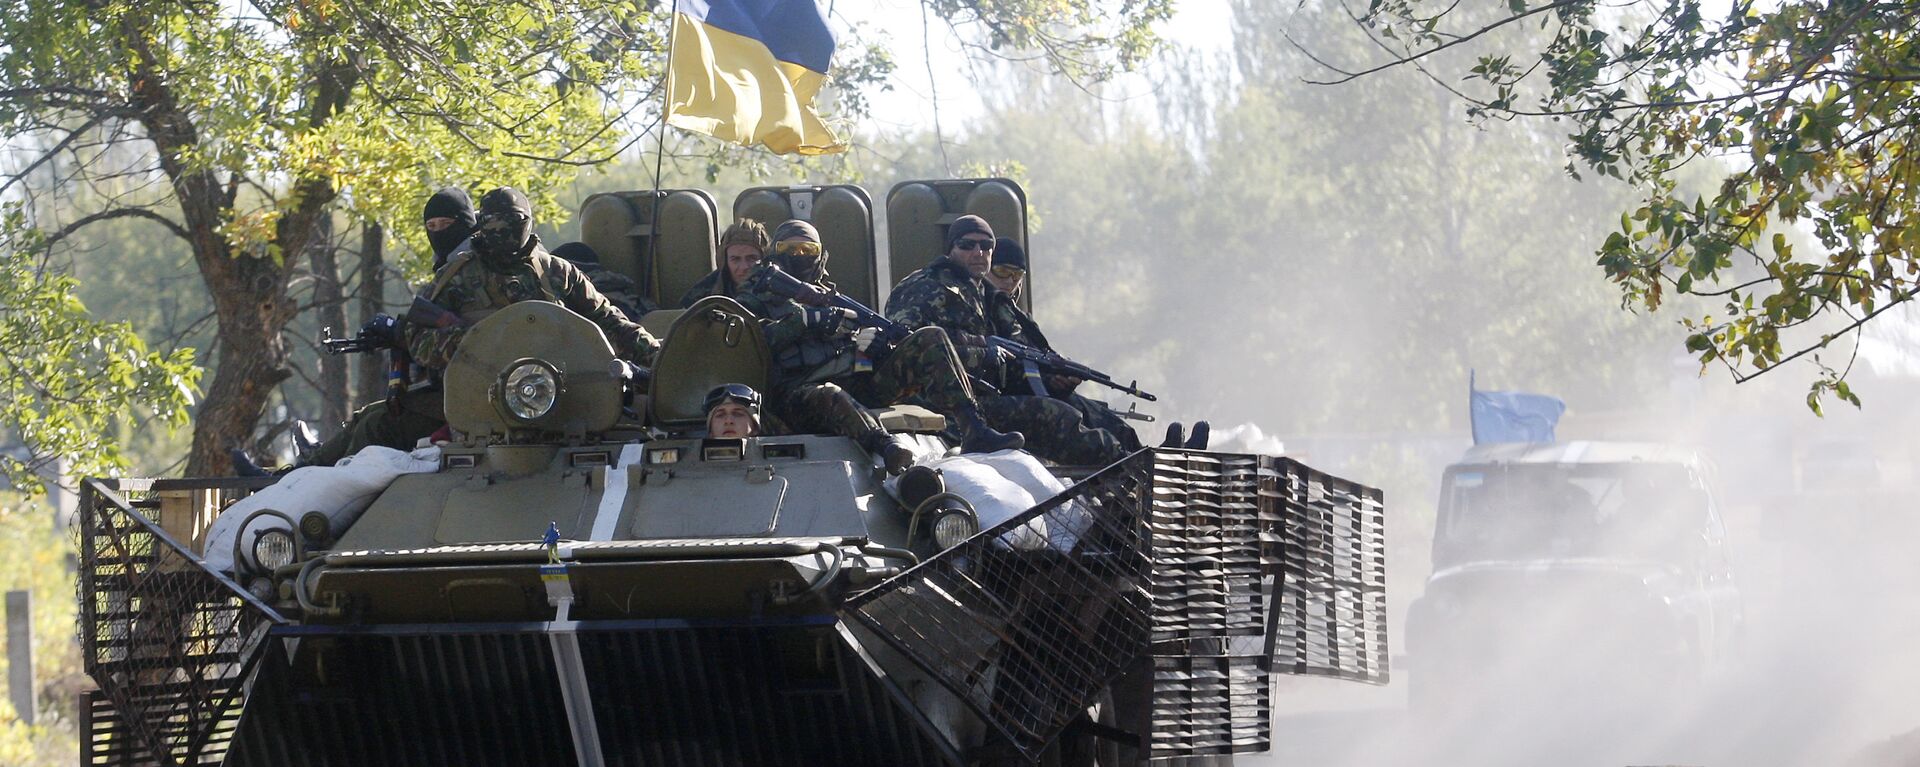 Ukrainian troops patrol in armored vehicles (File) - Sputnik International, 1920, 20.01.2023